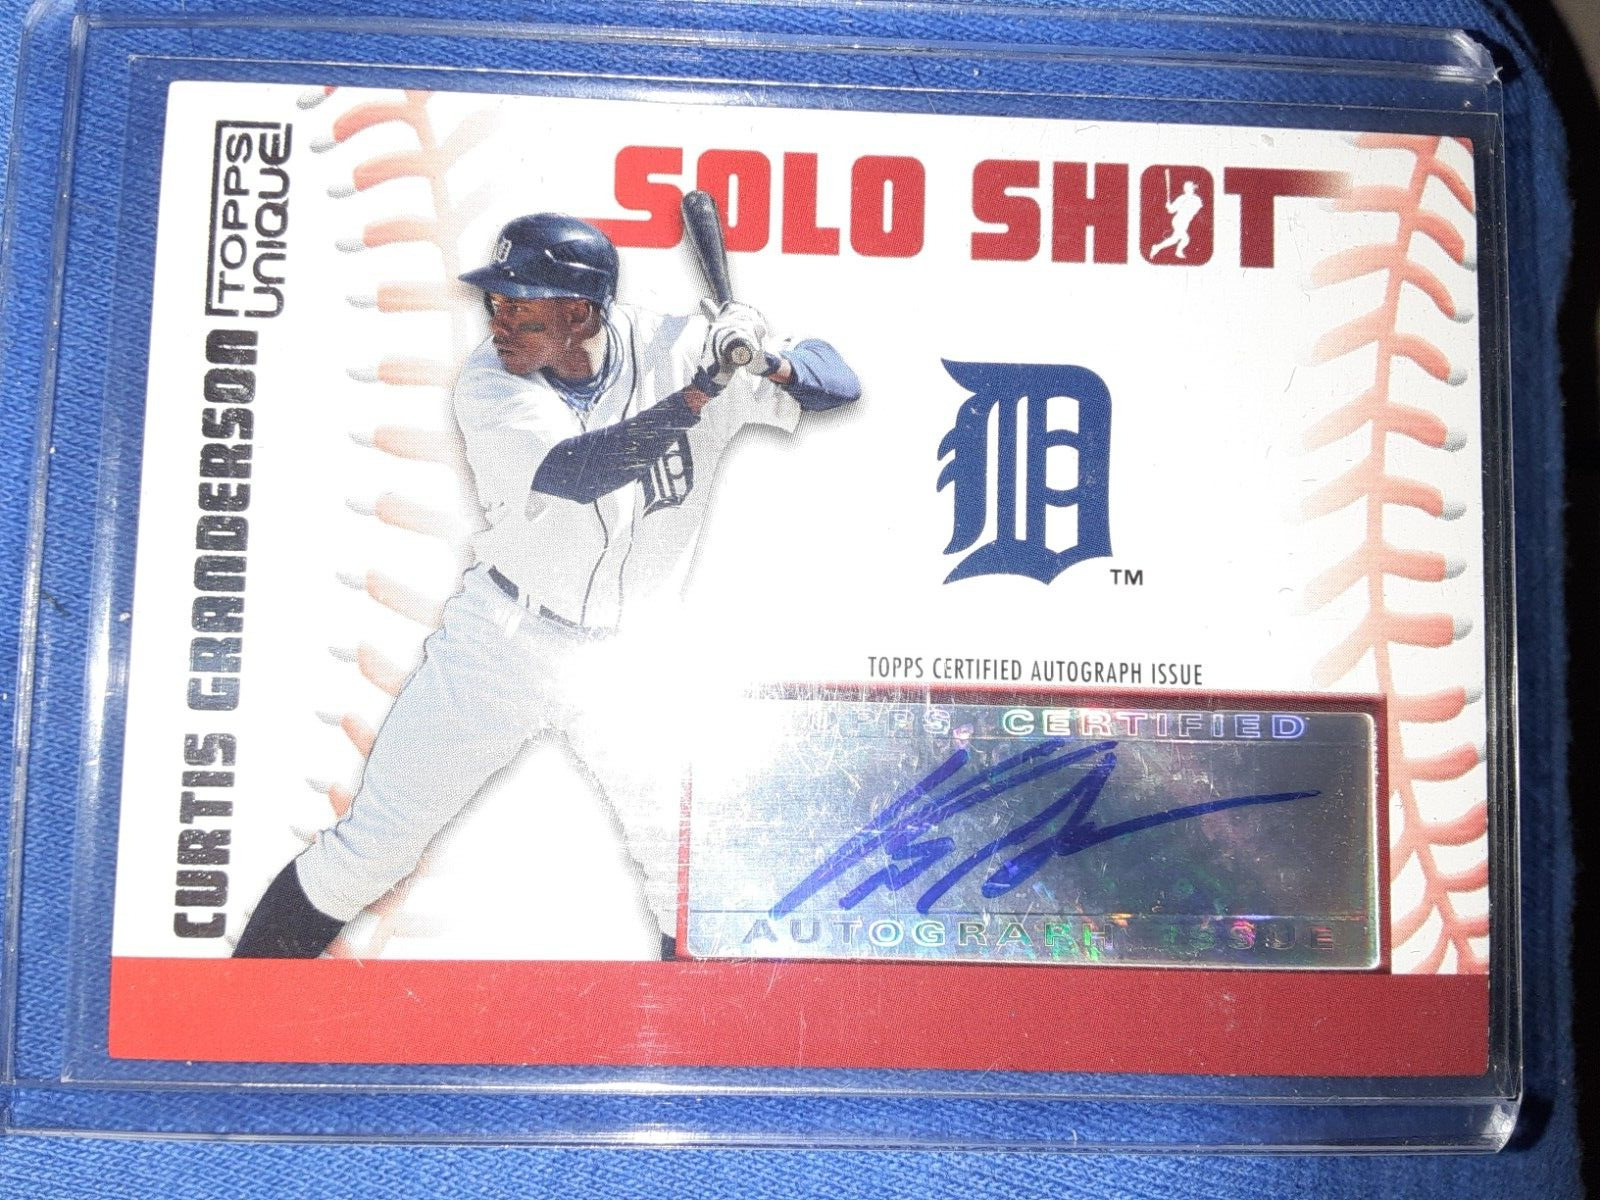 2009 Topps Unique Solo Shot Autographed Card Tigers Curtis Granderson SSA-CG MVP